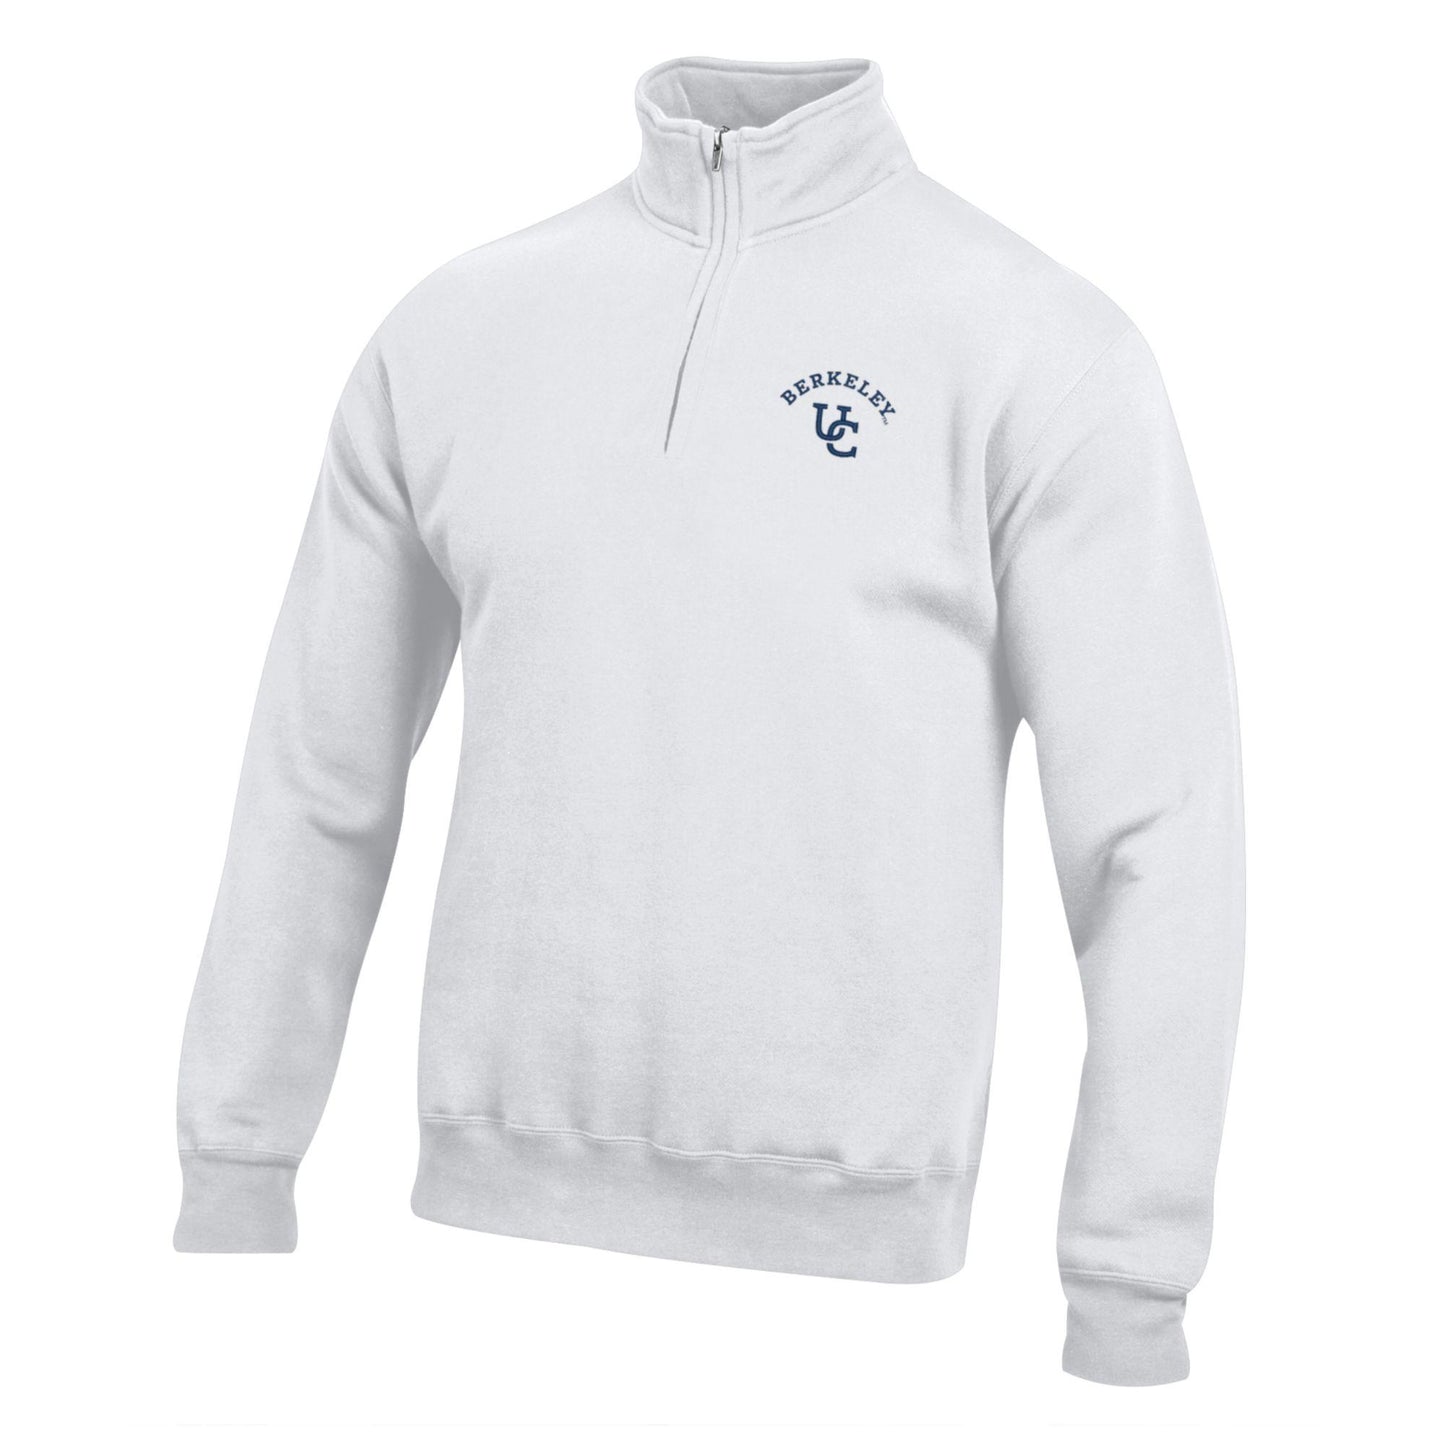 U.C. Berkeley Cal embroidered Big Cotton 1/4" Zip men's sweatshirt-White-Shop College Wear